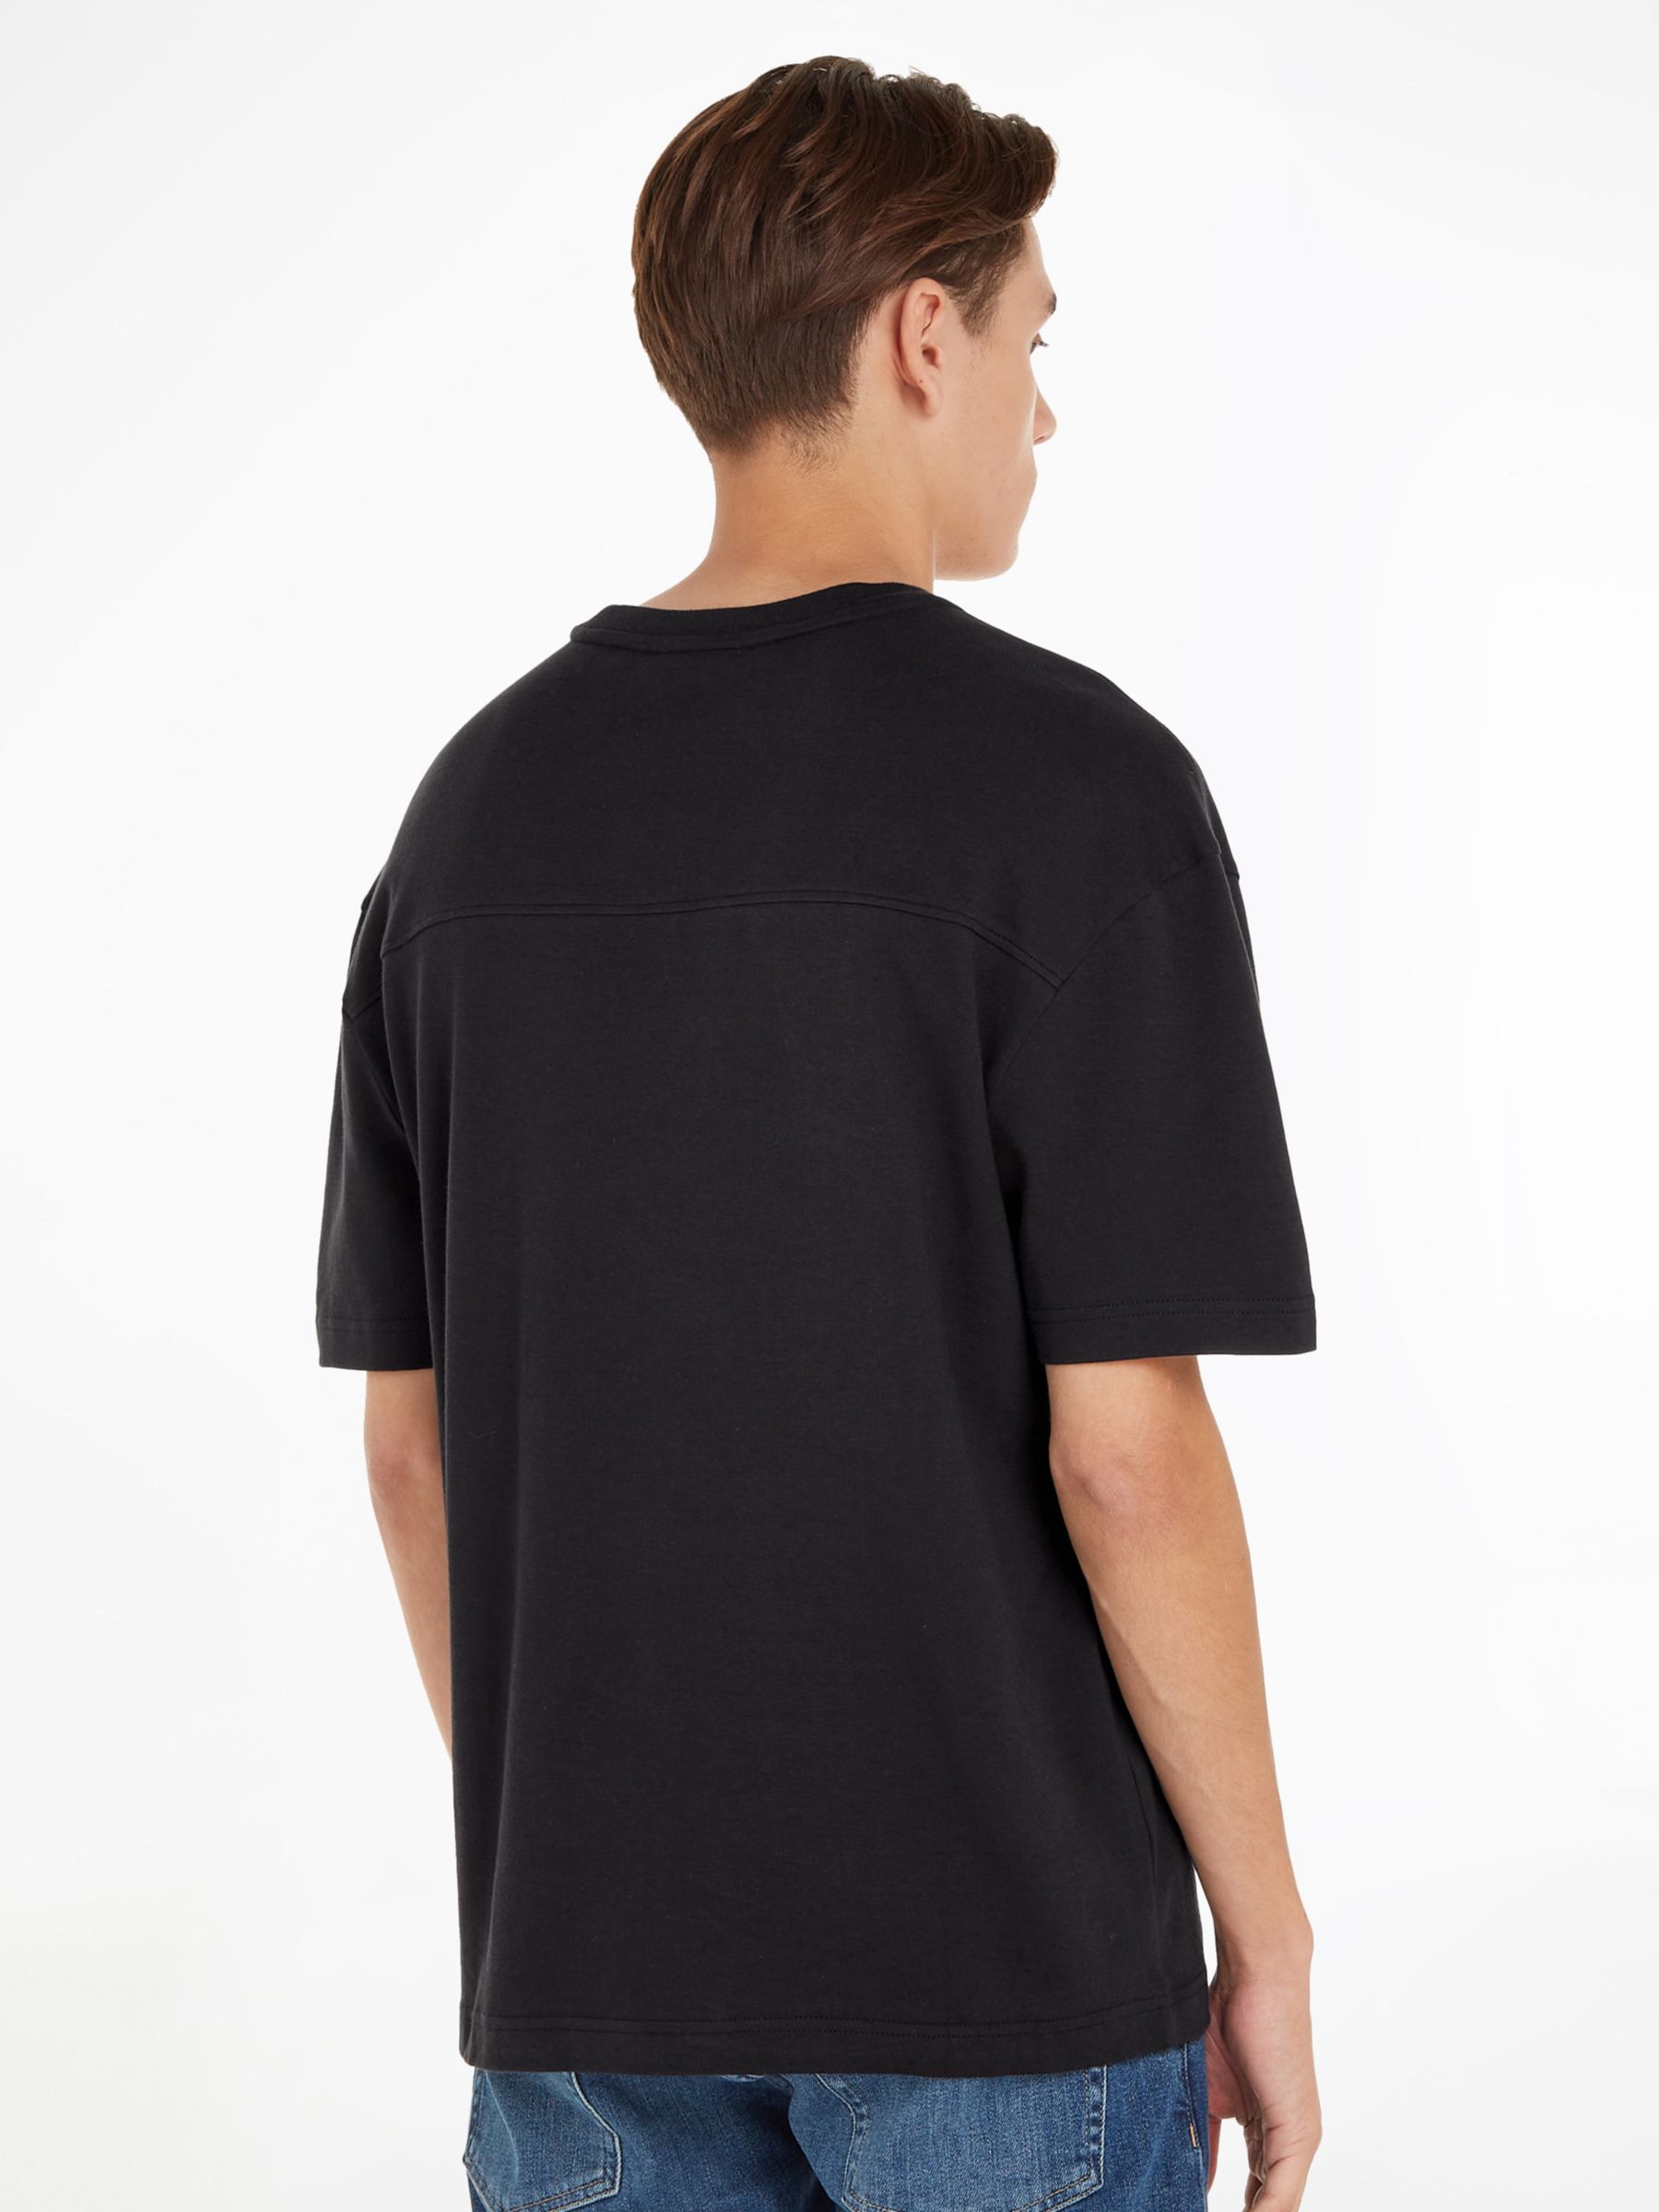 Calvin Klein Comfort T-Shirt, Black